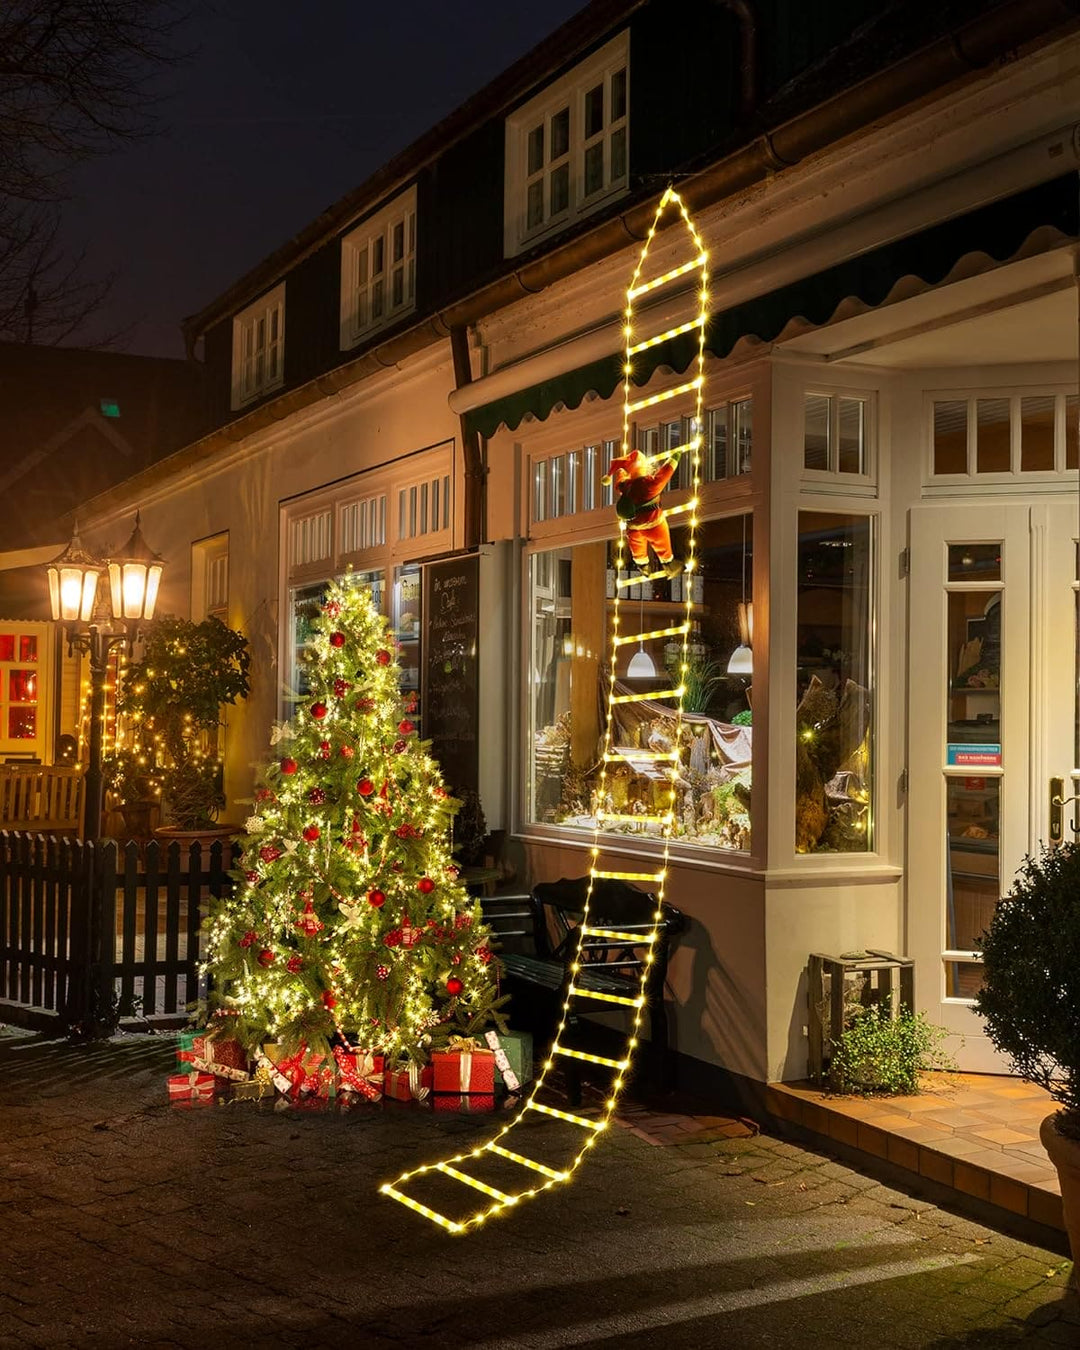 Decorative Ladder Lights with Santa Claus